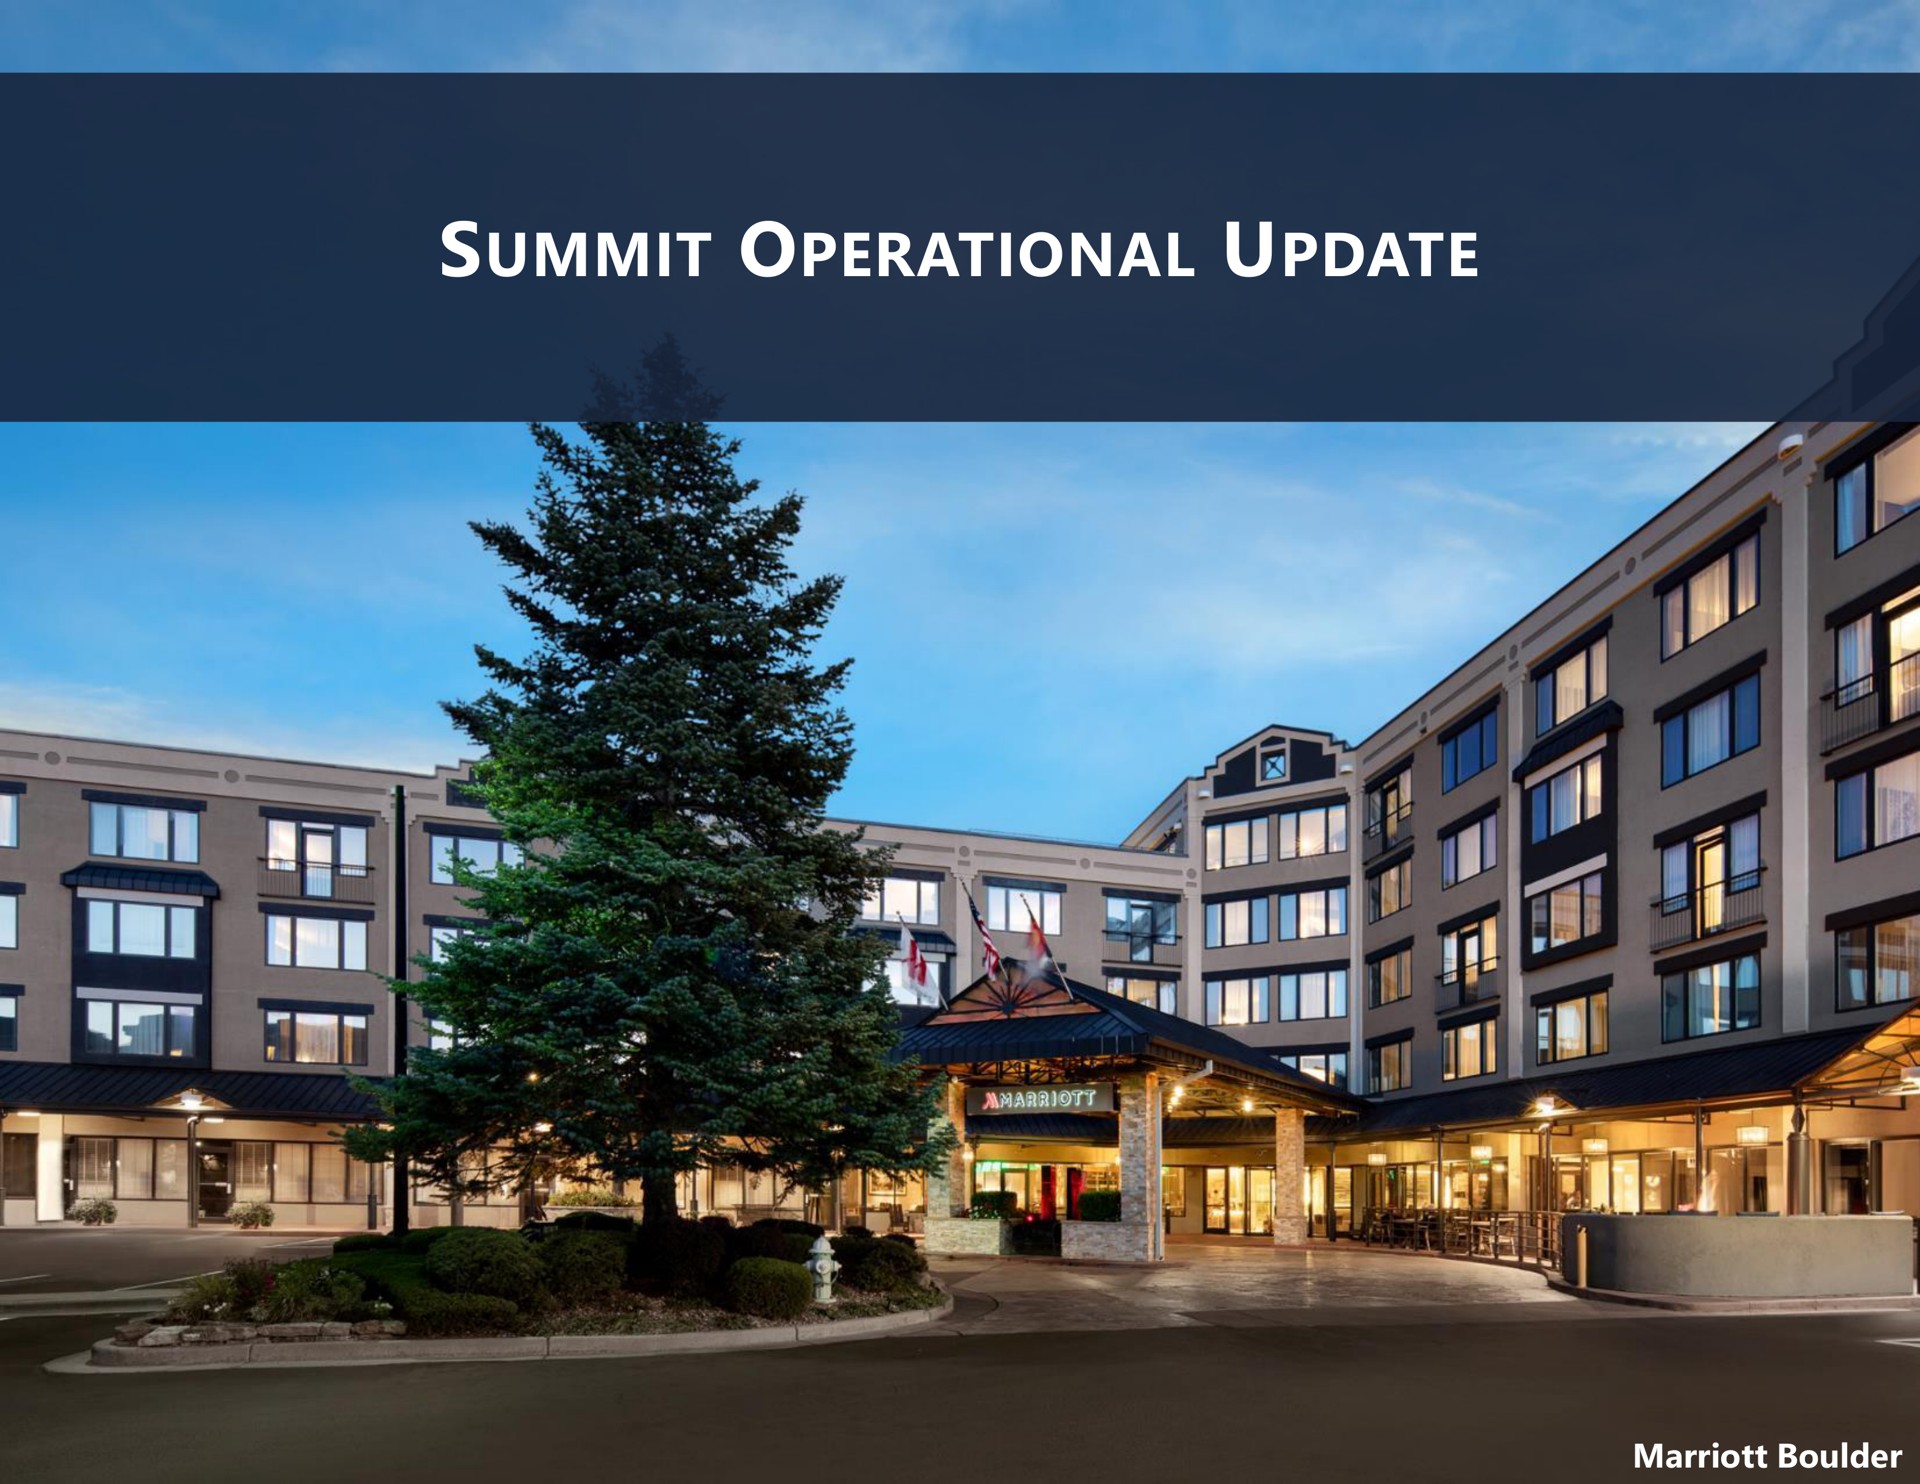 summit operational update | Summit Hotel Properties